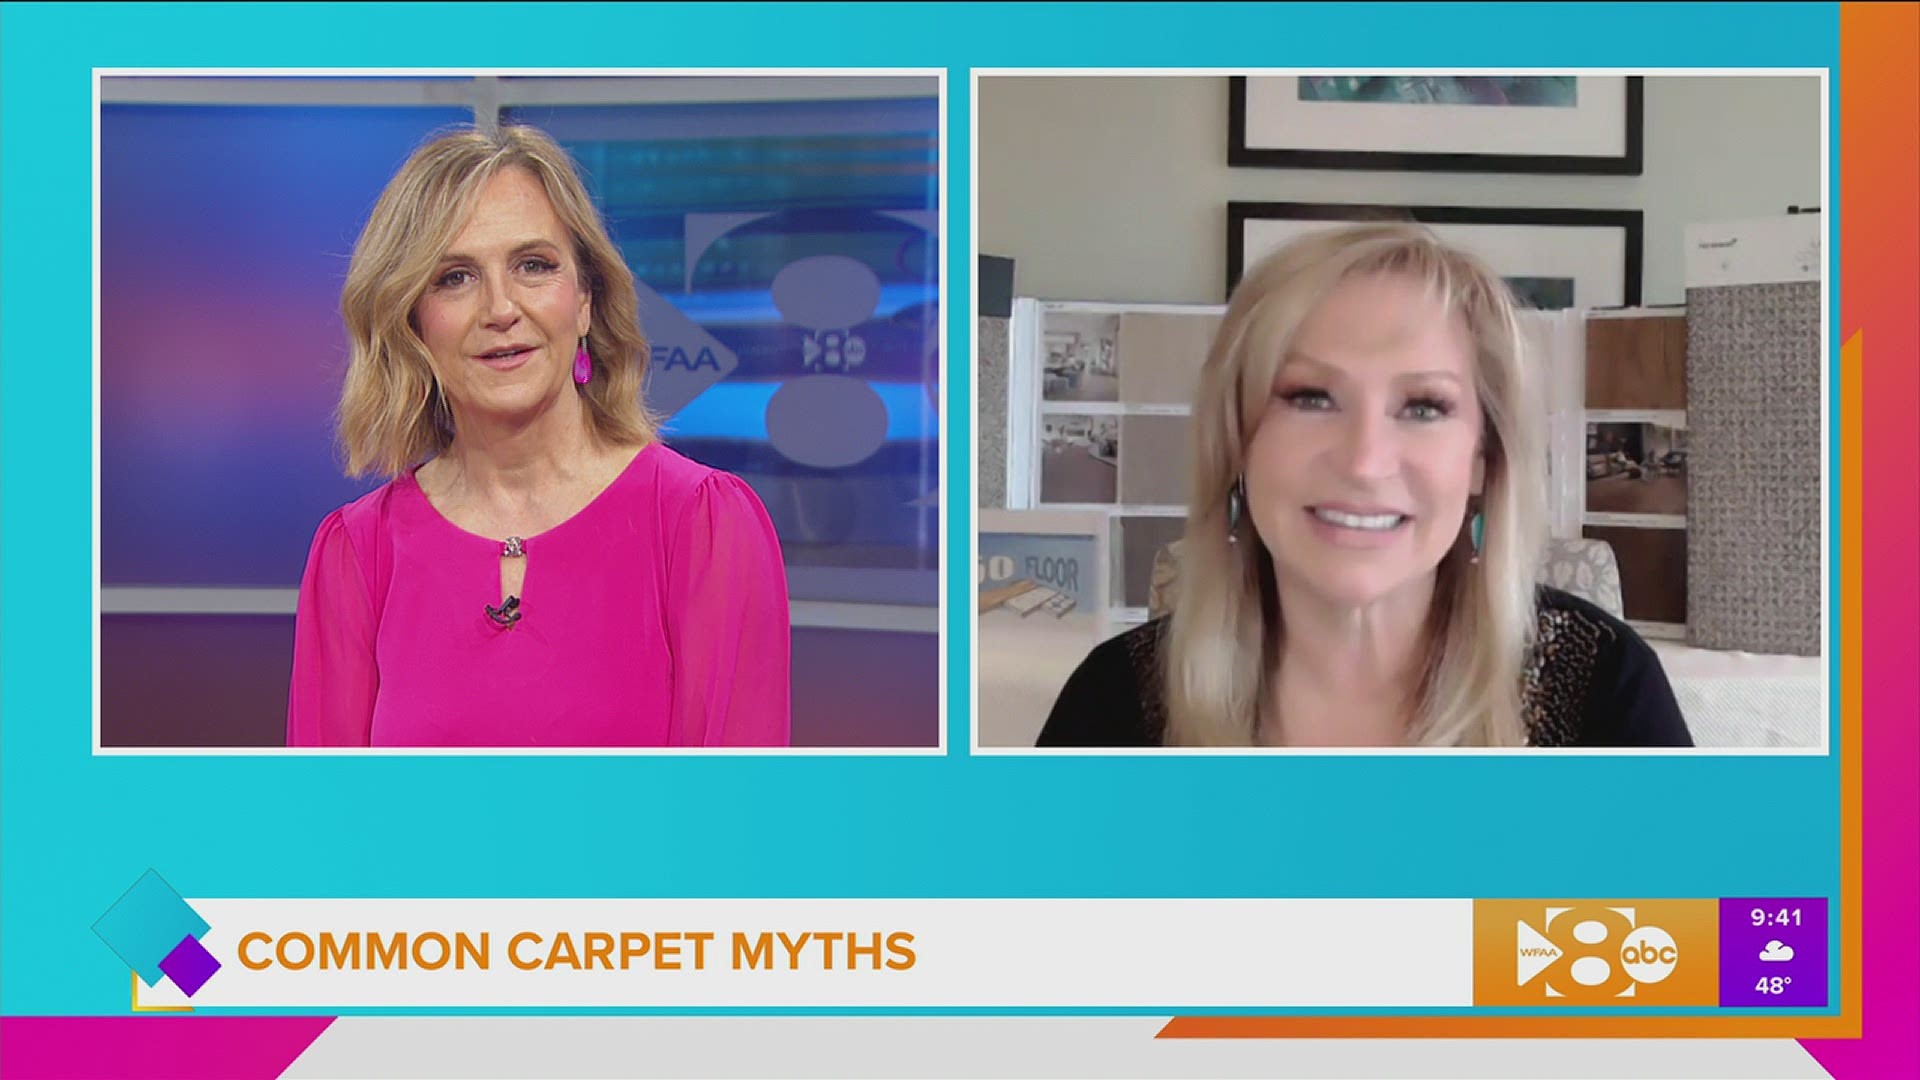 The top carpet myths